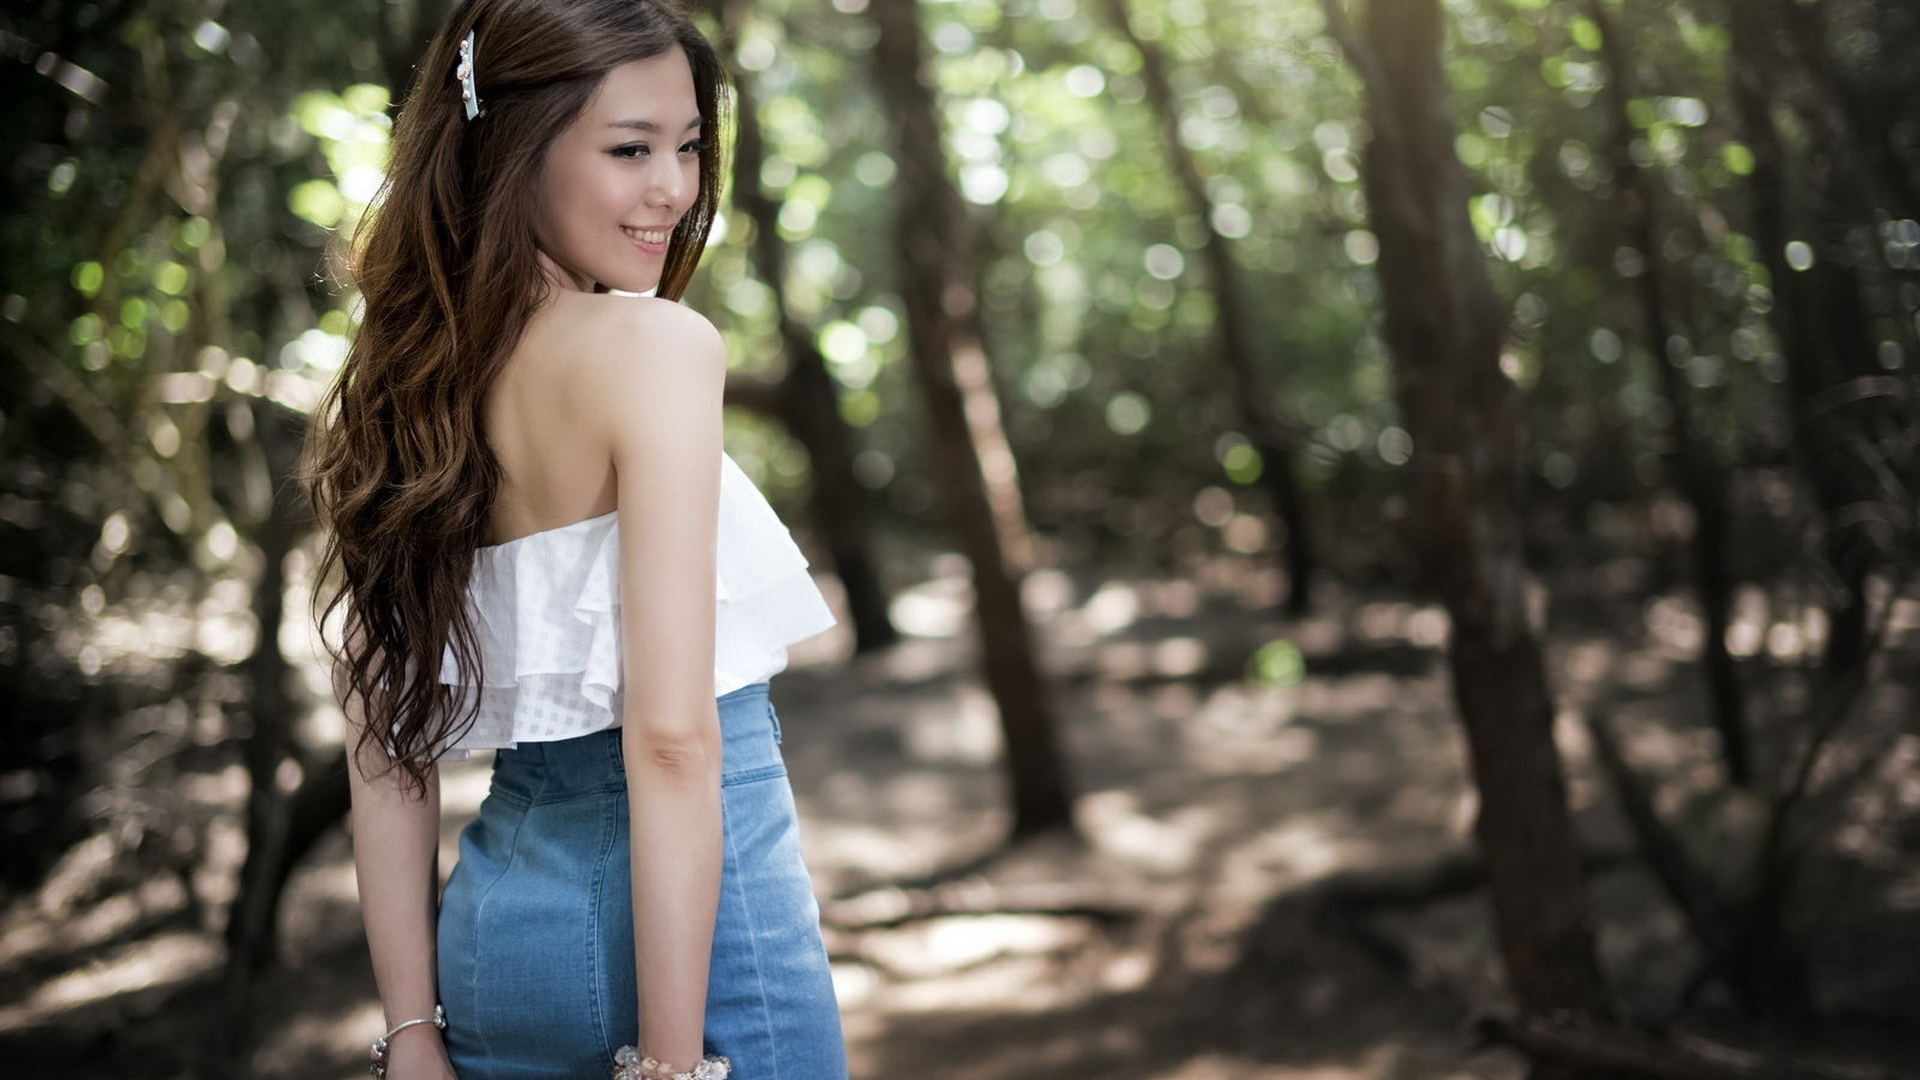 Image: Girl, Asian, hair, barrette, smiling, forest